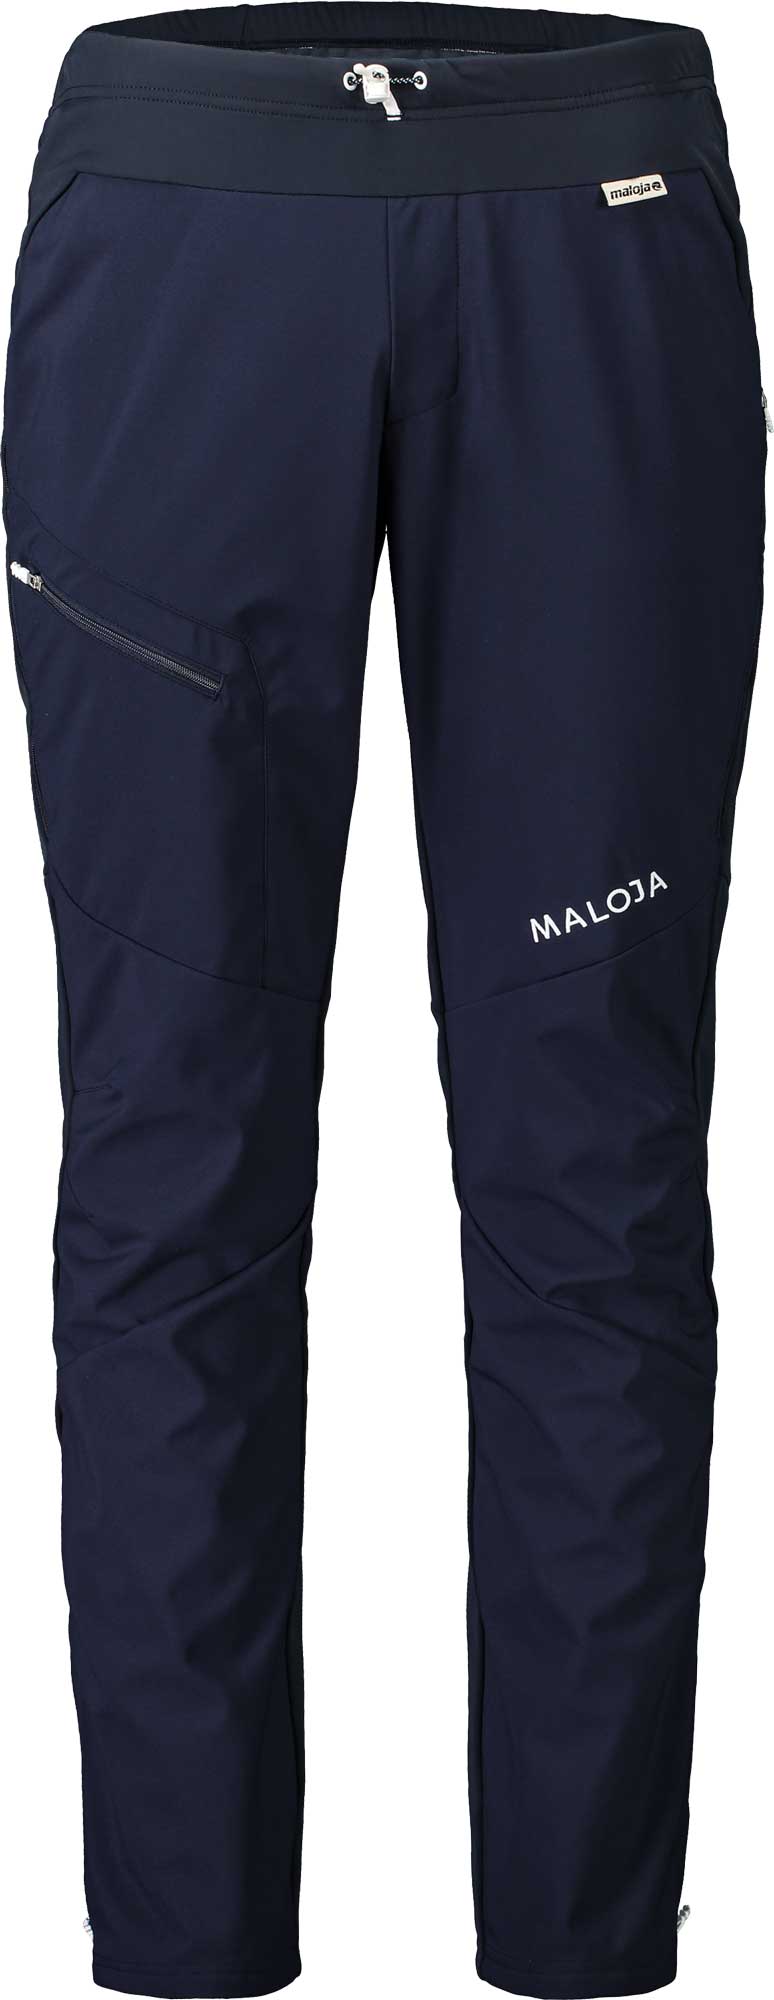 Nordic ski pants